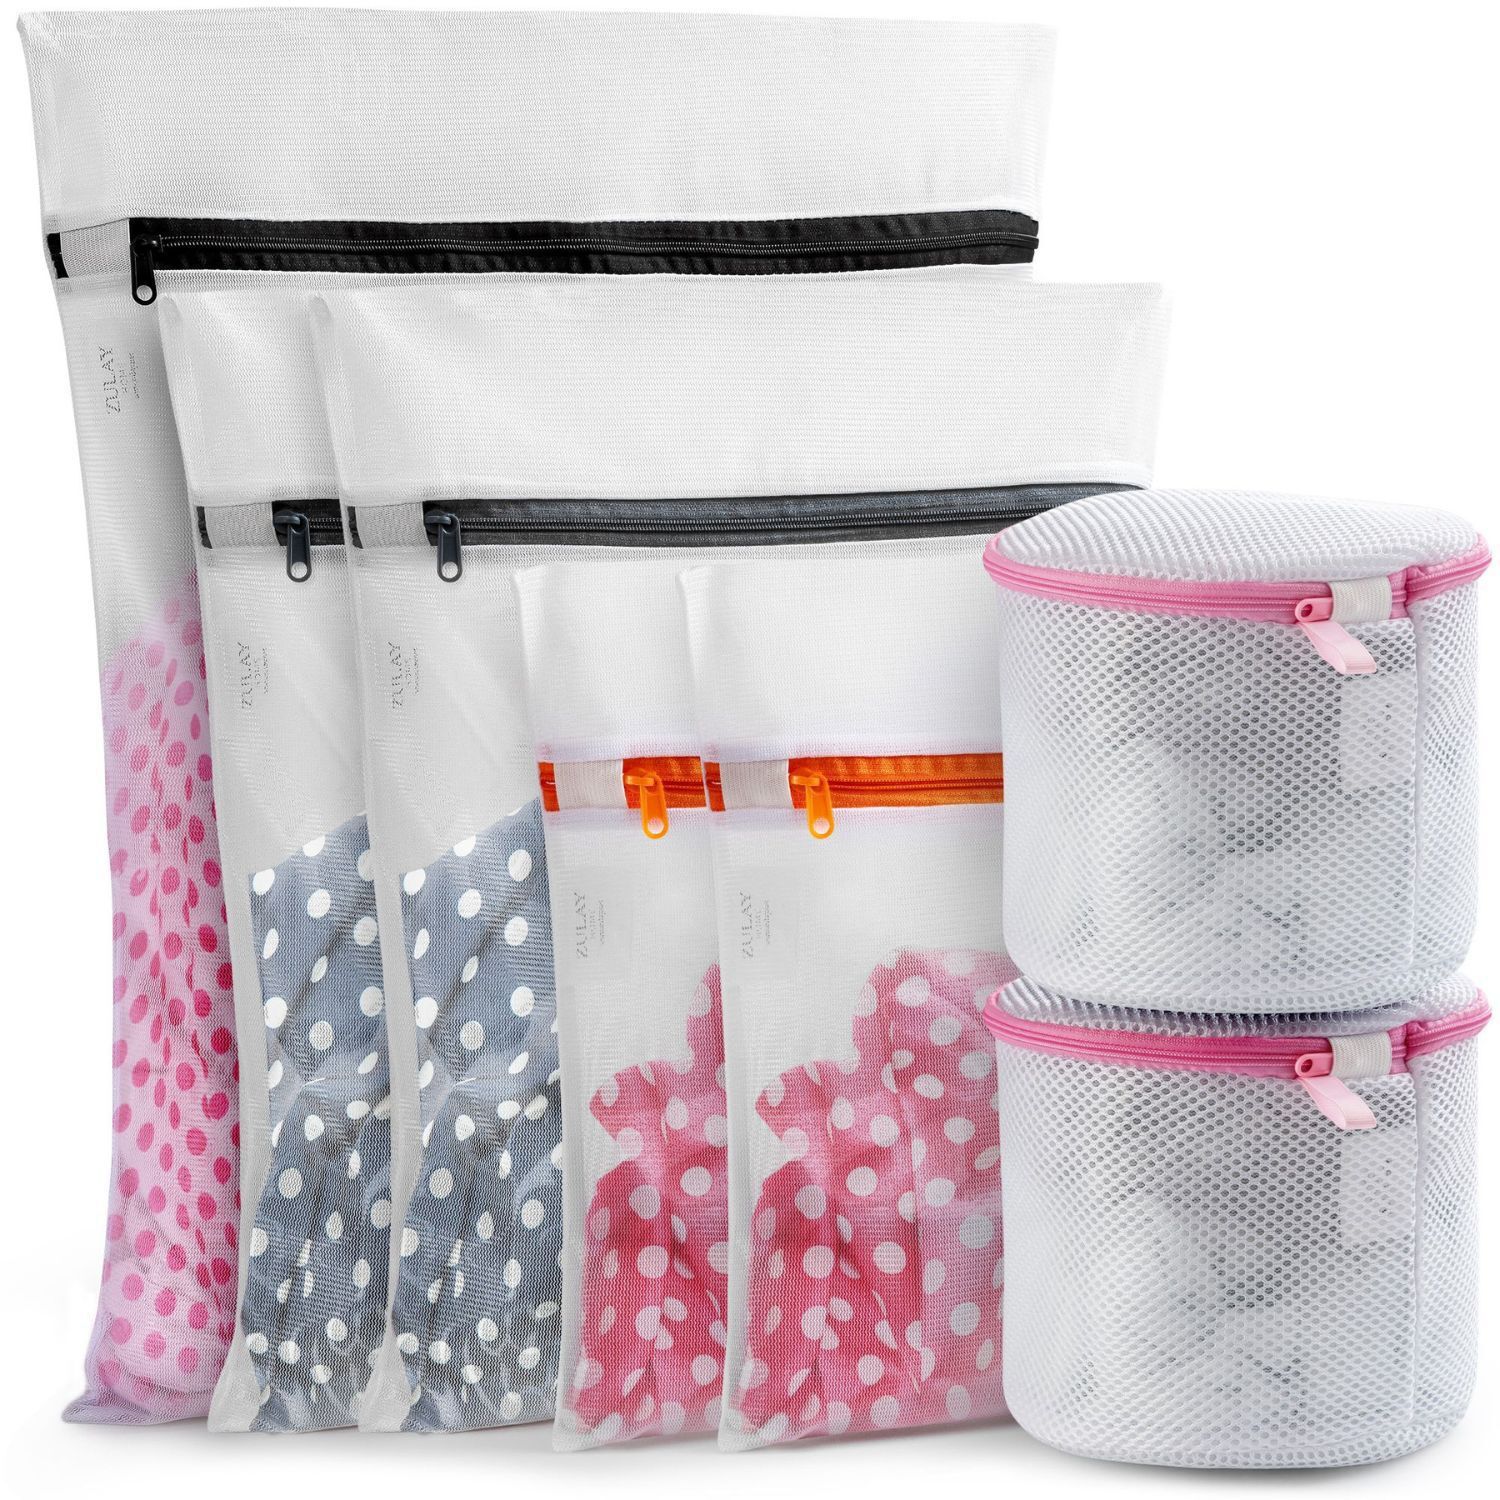 Bra Laundry Bags, 3pcs Mesh Wash Bags Cylindrical Zips Washing Machine Bag  For Bra, Underwear, Socks, Travel Laundry Storage, Organization